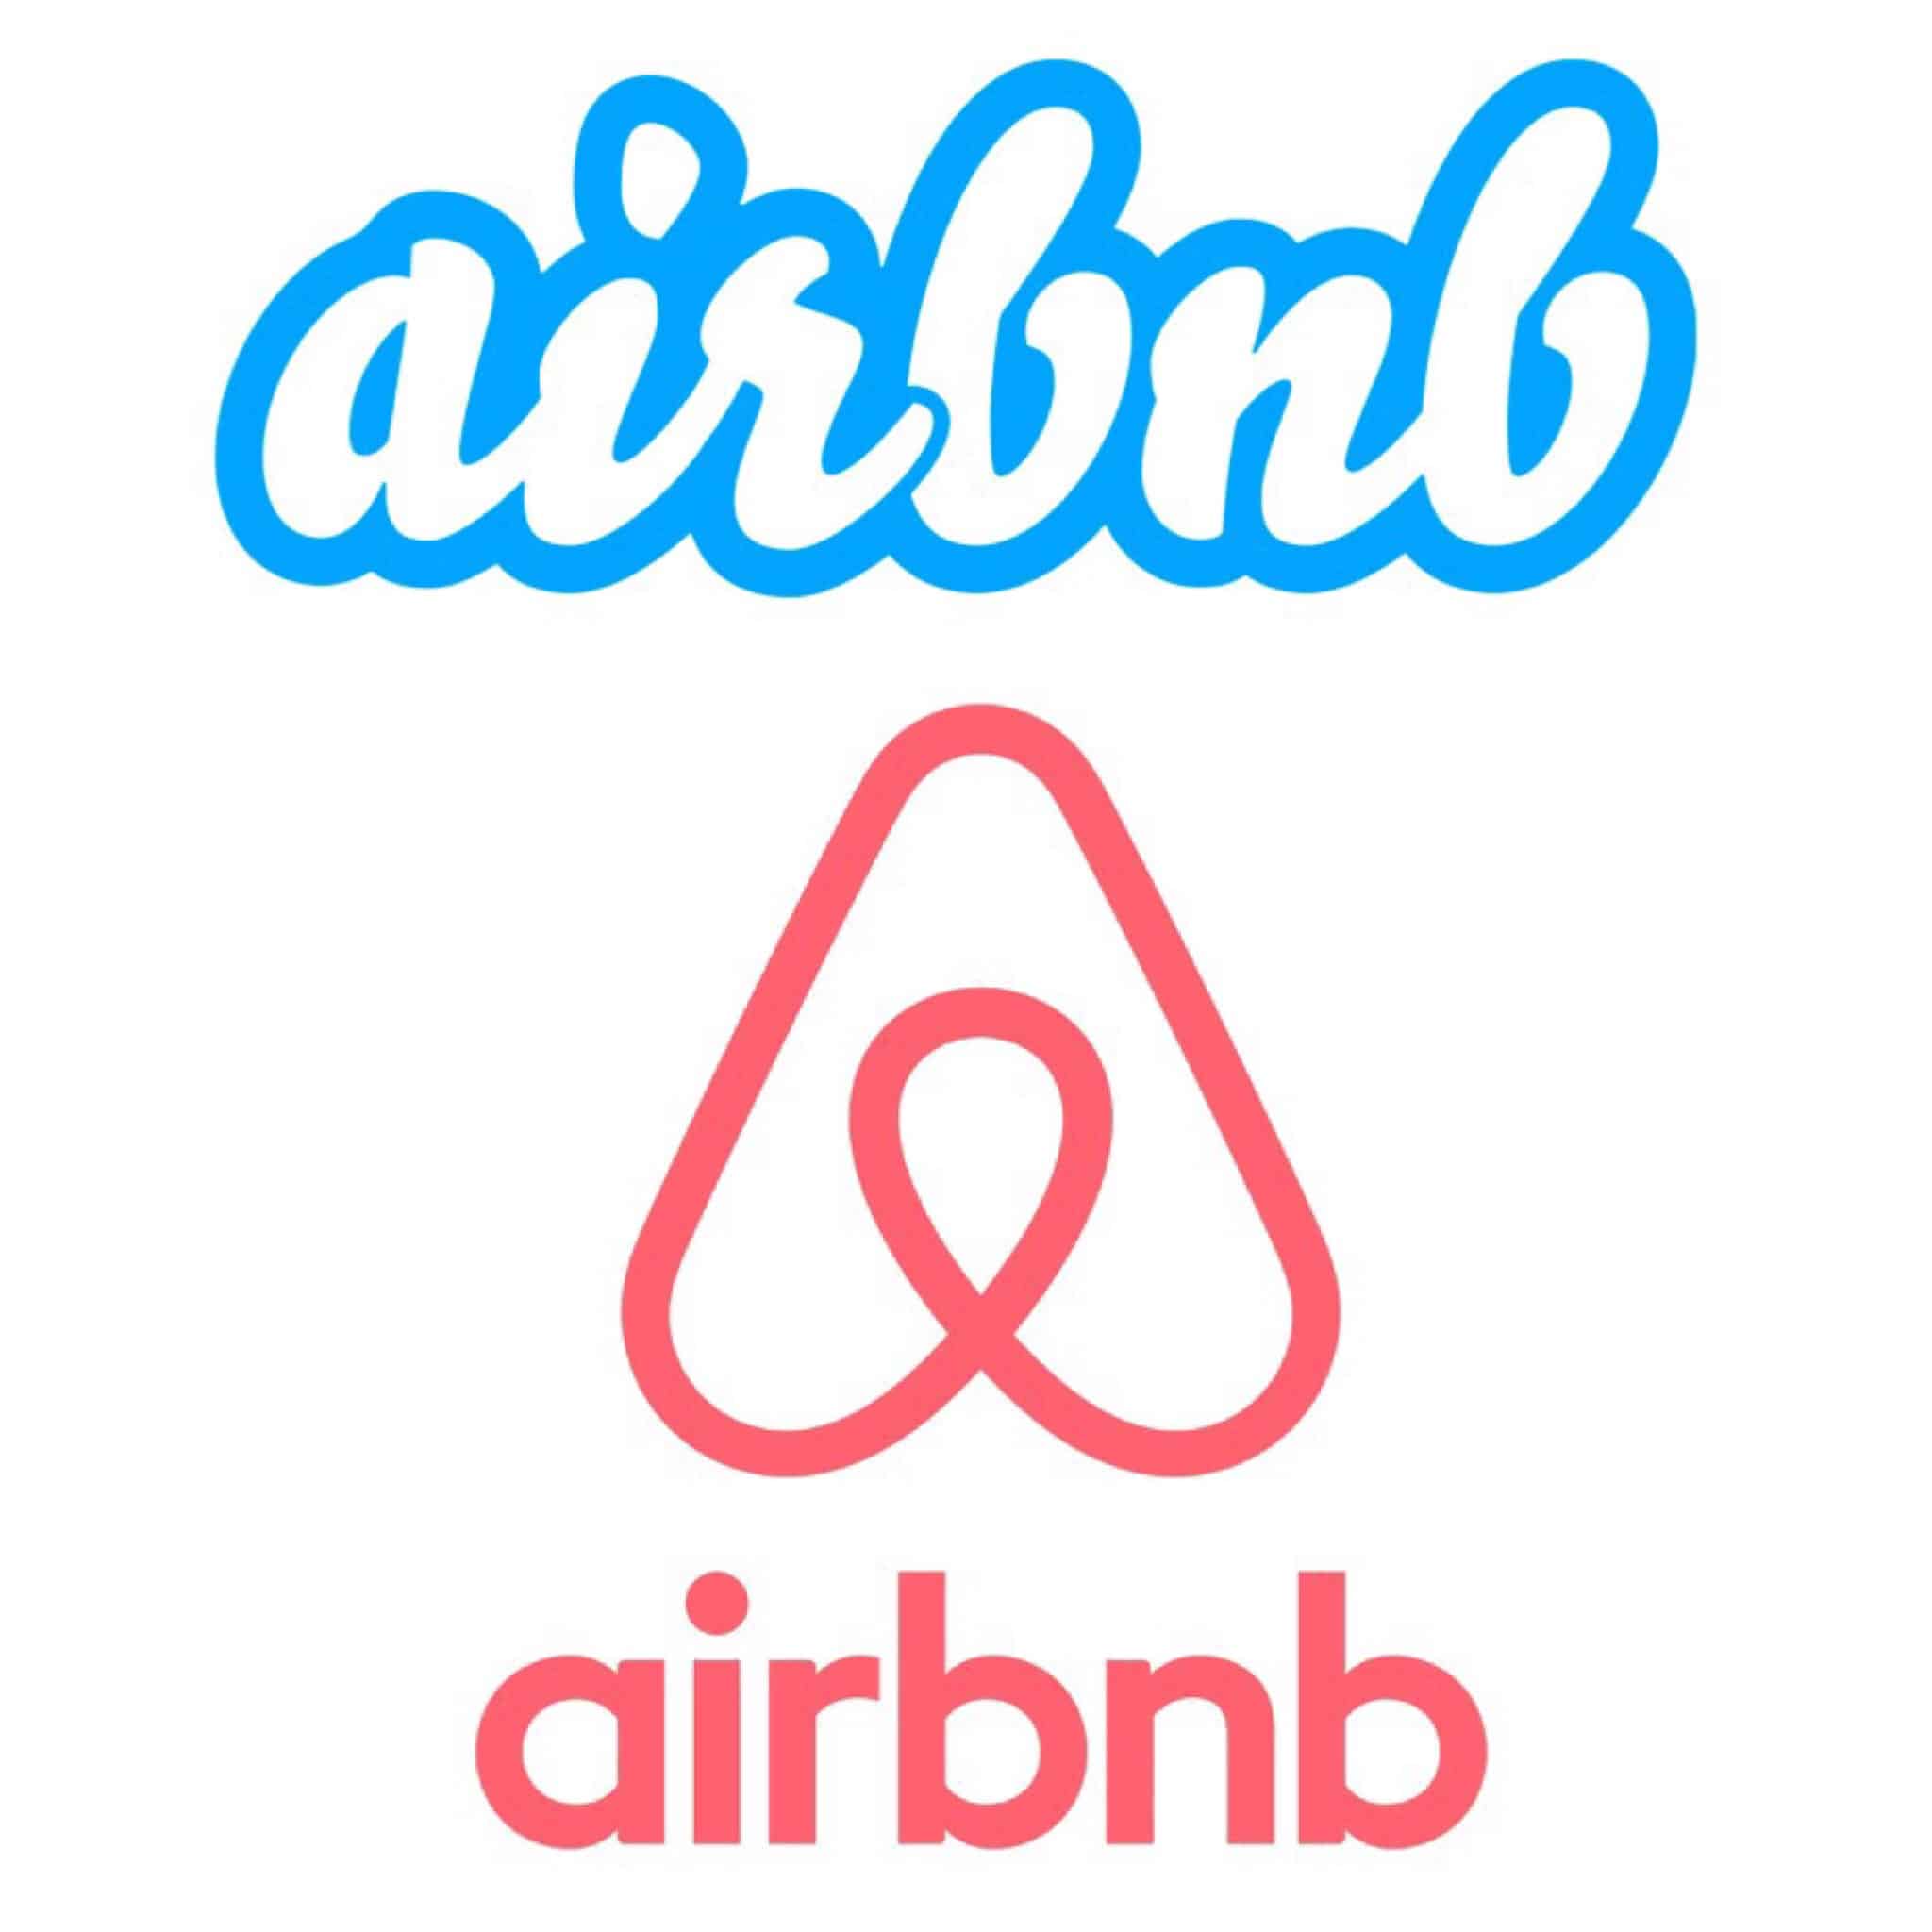 Airbnb logos